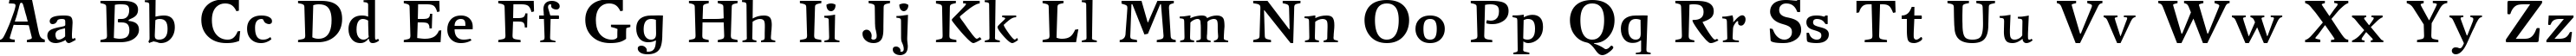 Пример написания английского алфавита шрифтом NewJournalCTT Bold